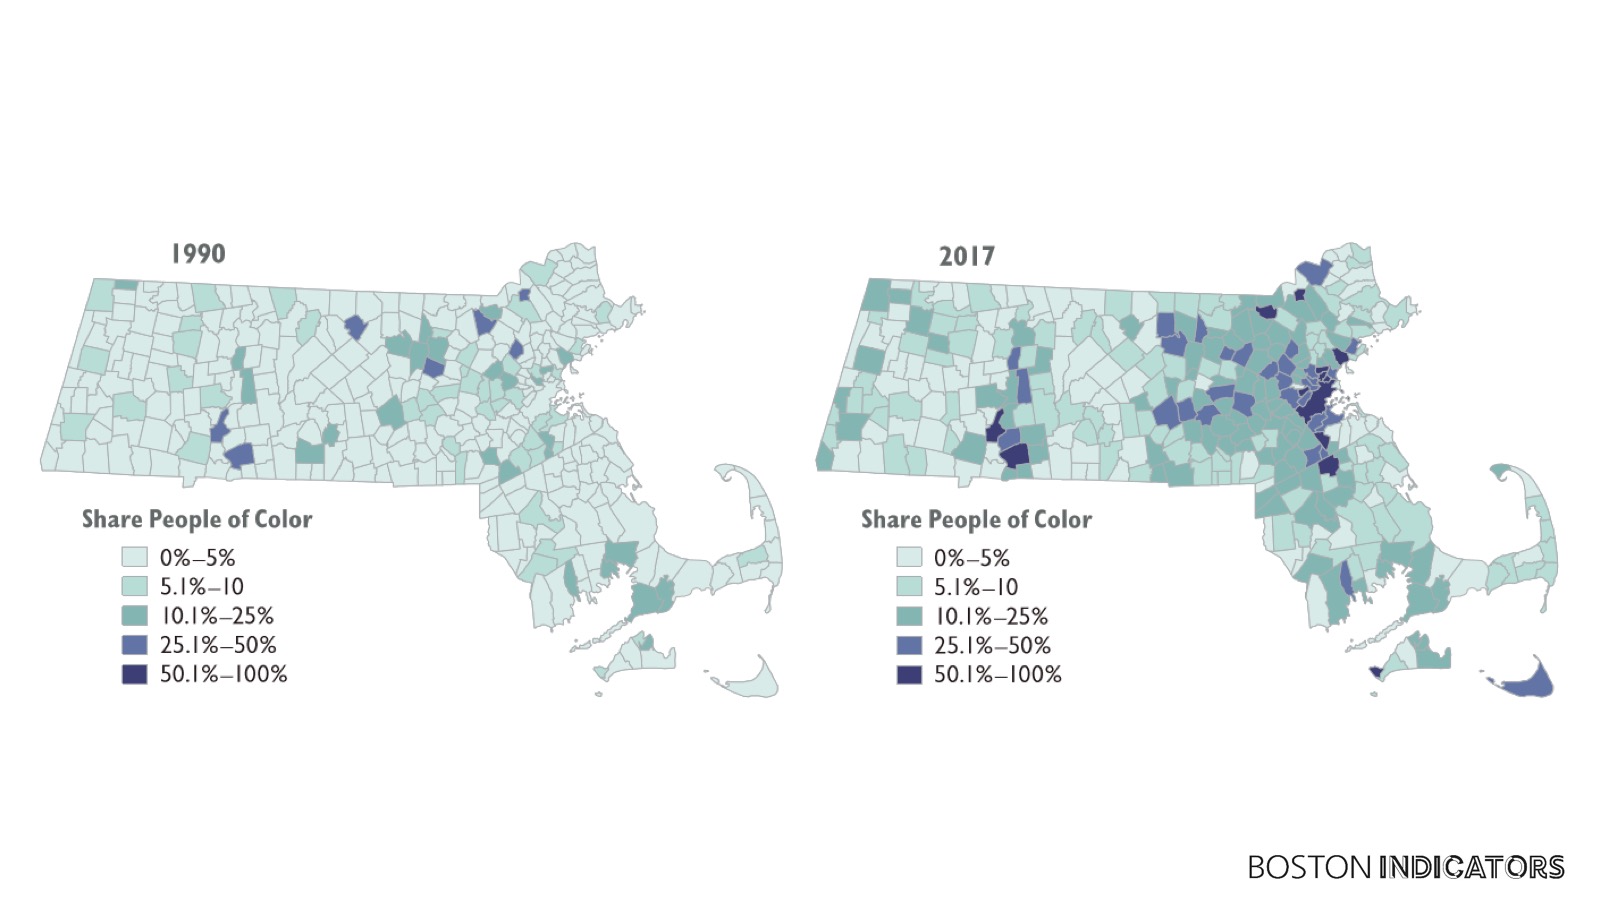 New Boston Indicators report highlights three decades of demographic